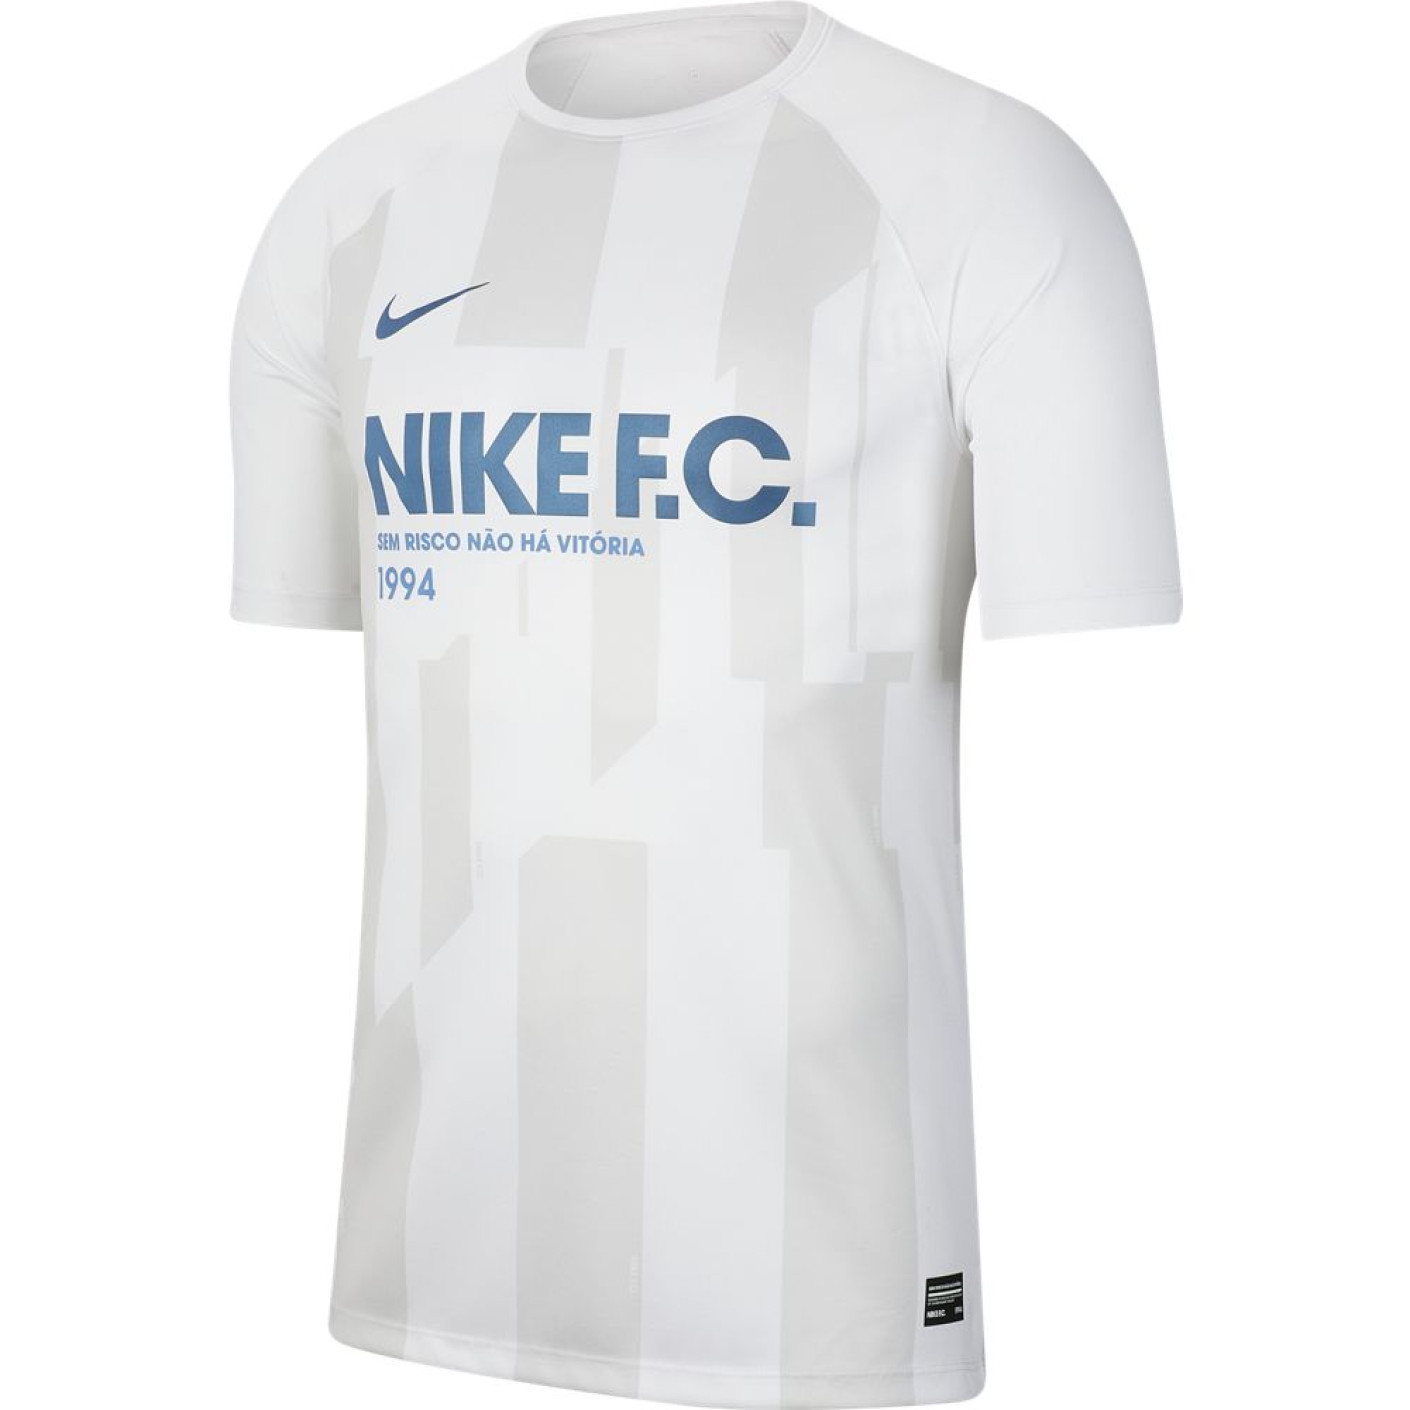 Nike F.C. Voetbalshirt Wit Blauw